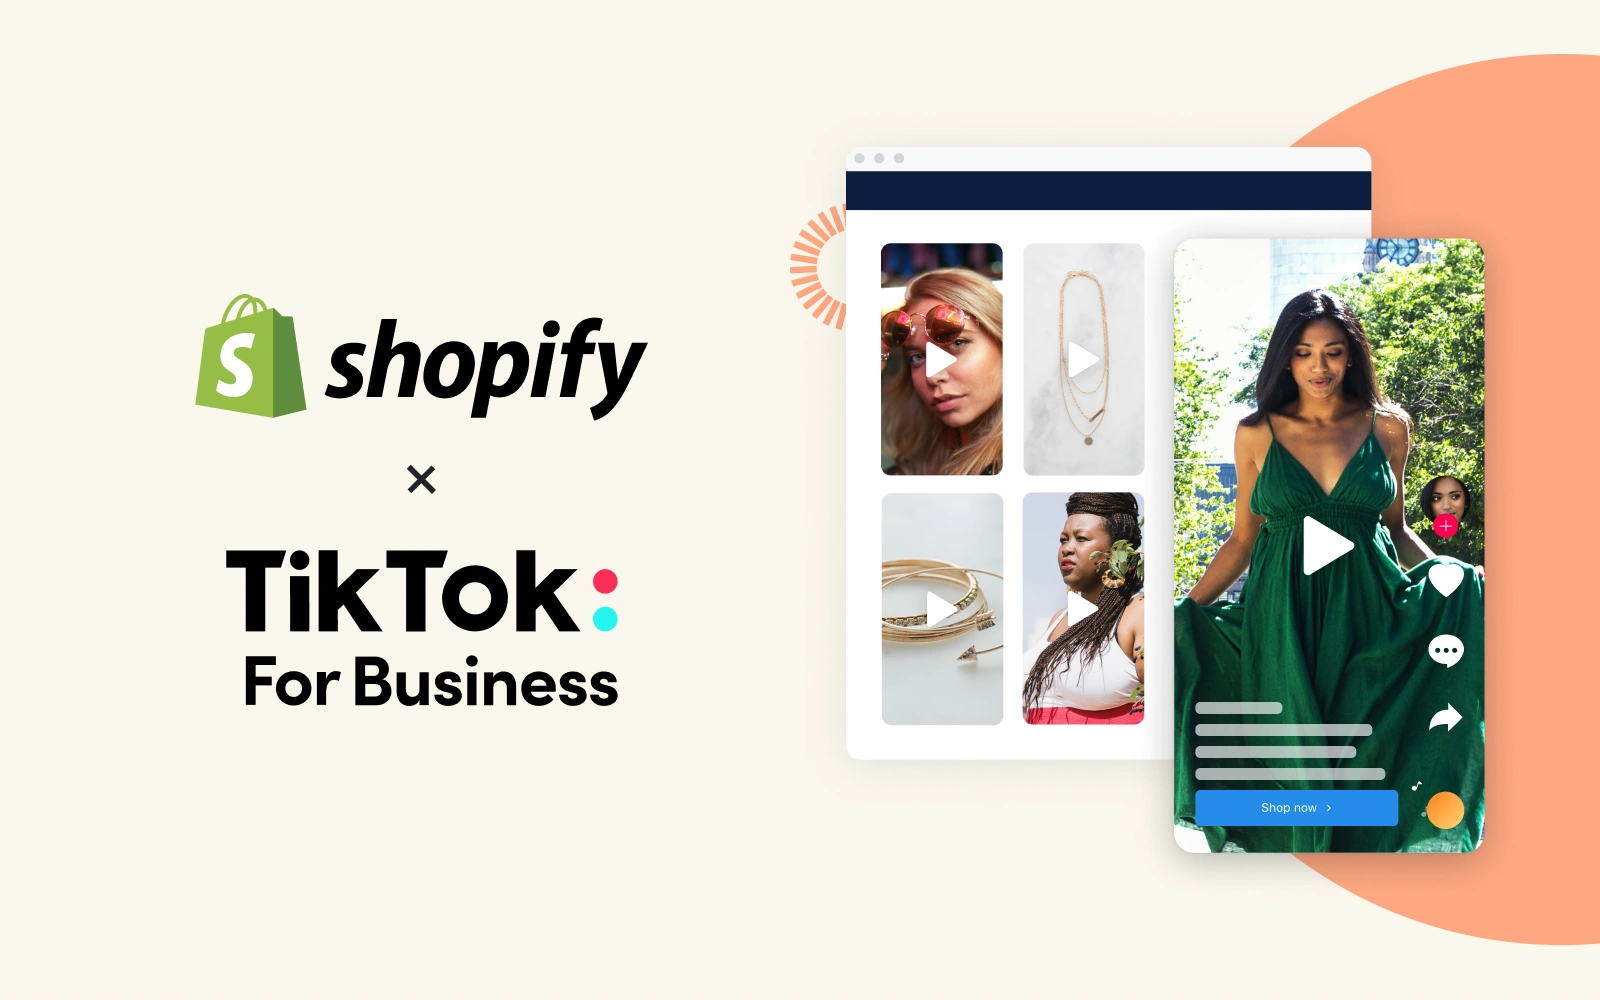 Shopify and Tiktok